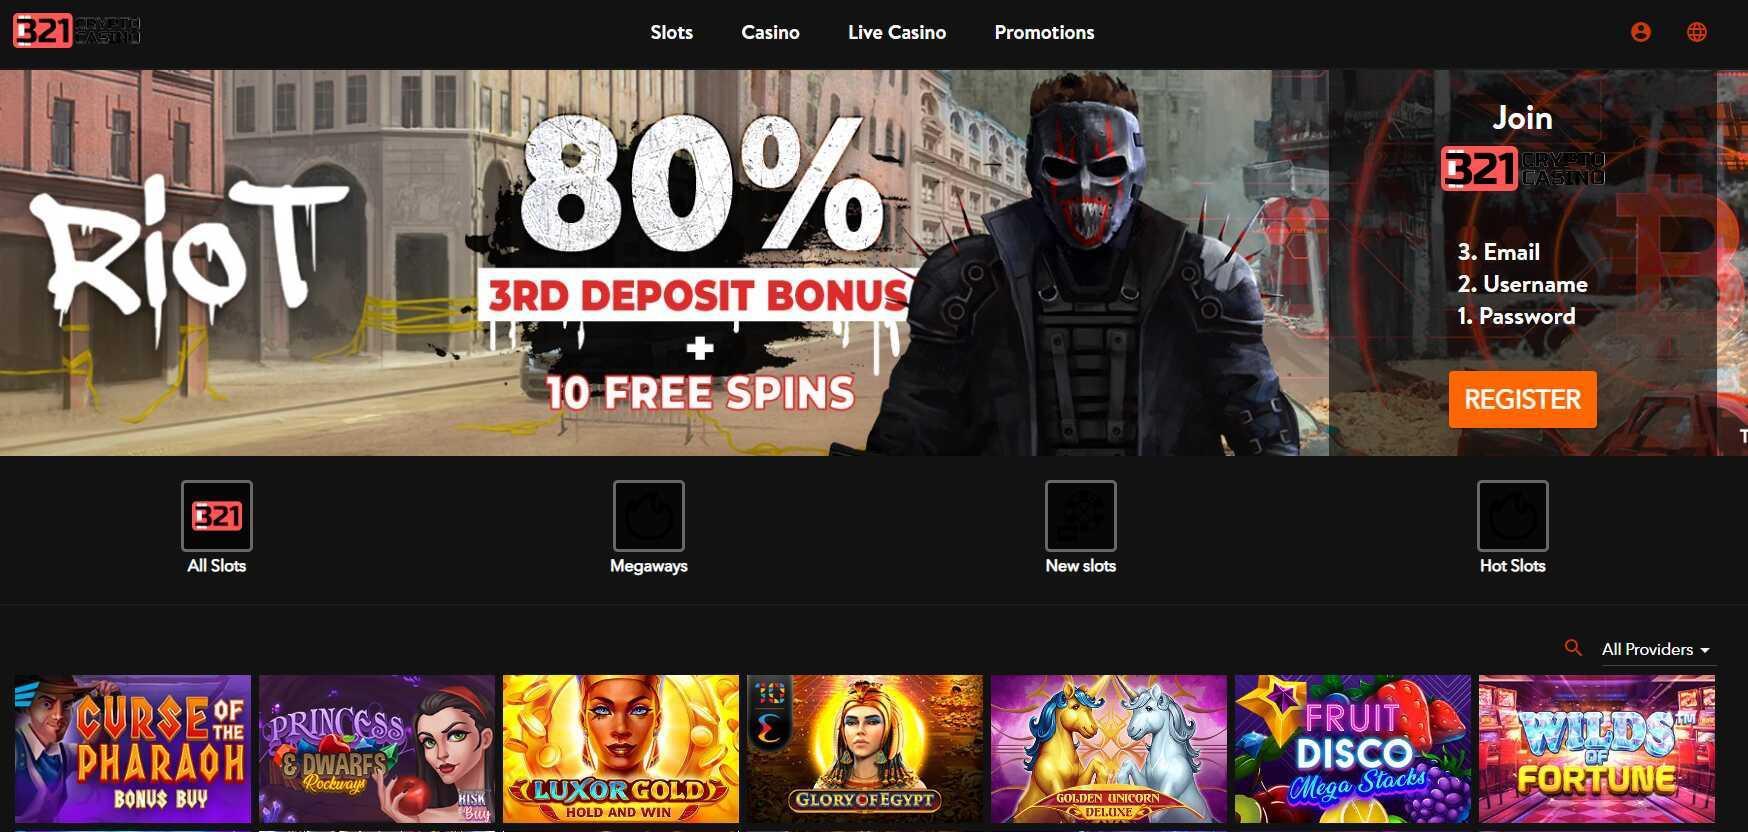 Screenshot of 321 Casino landing page